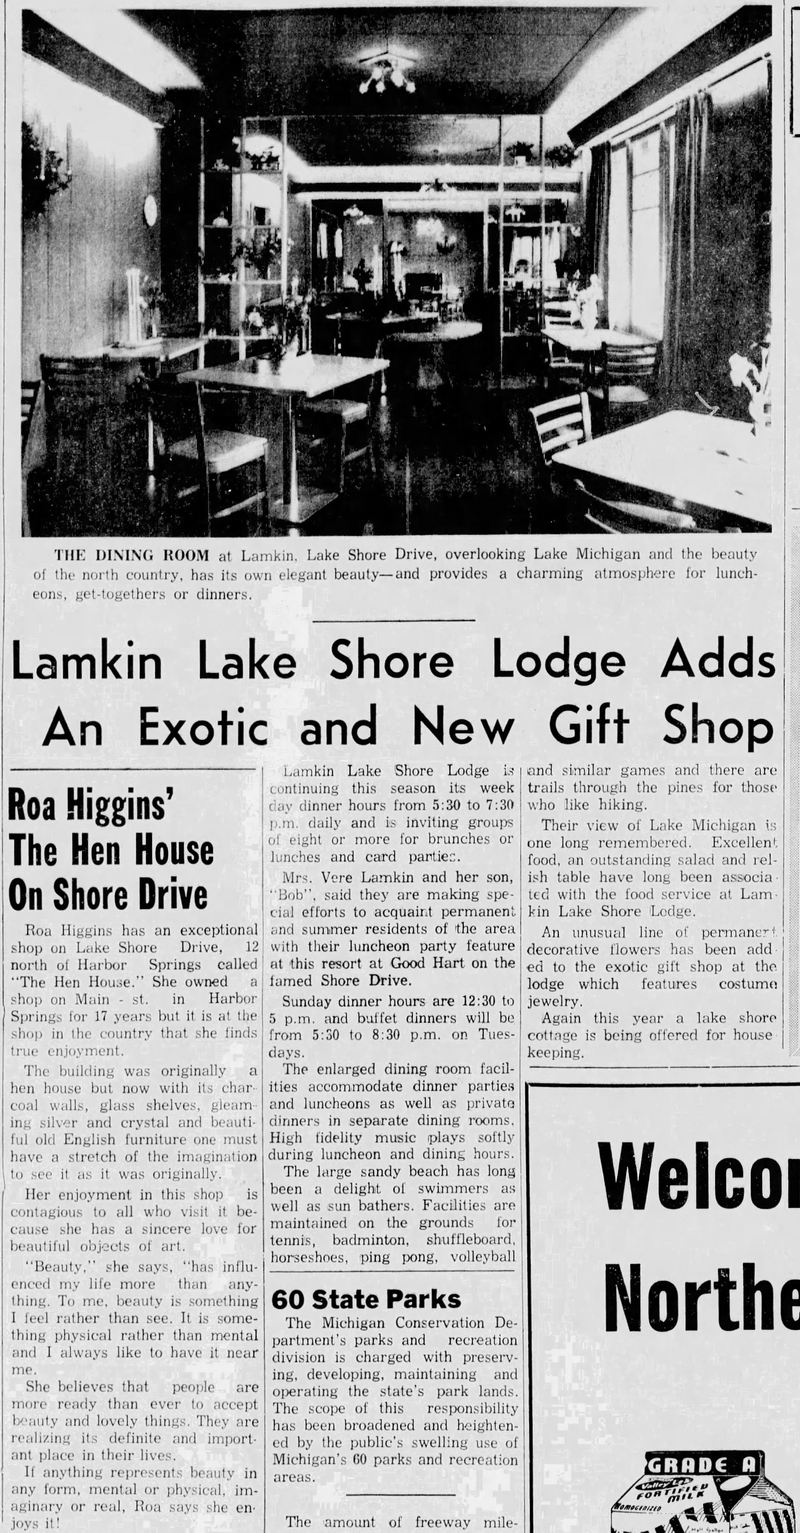 Lamkin Lake Shore Lodge - Jul 1 1963 Article (newer photo)